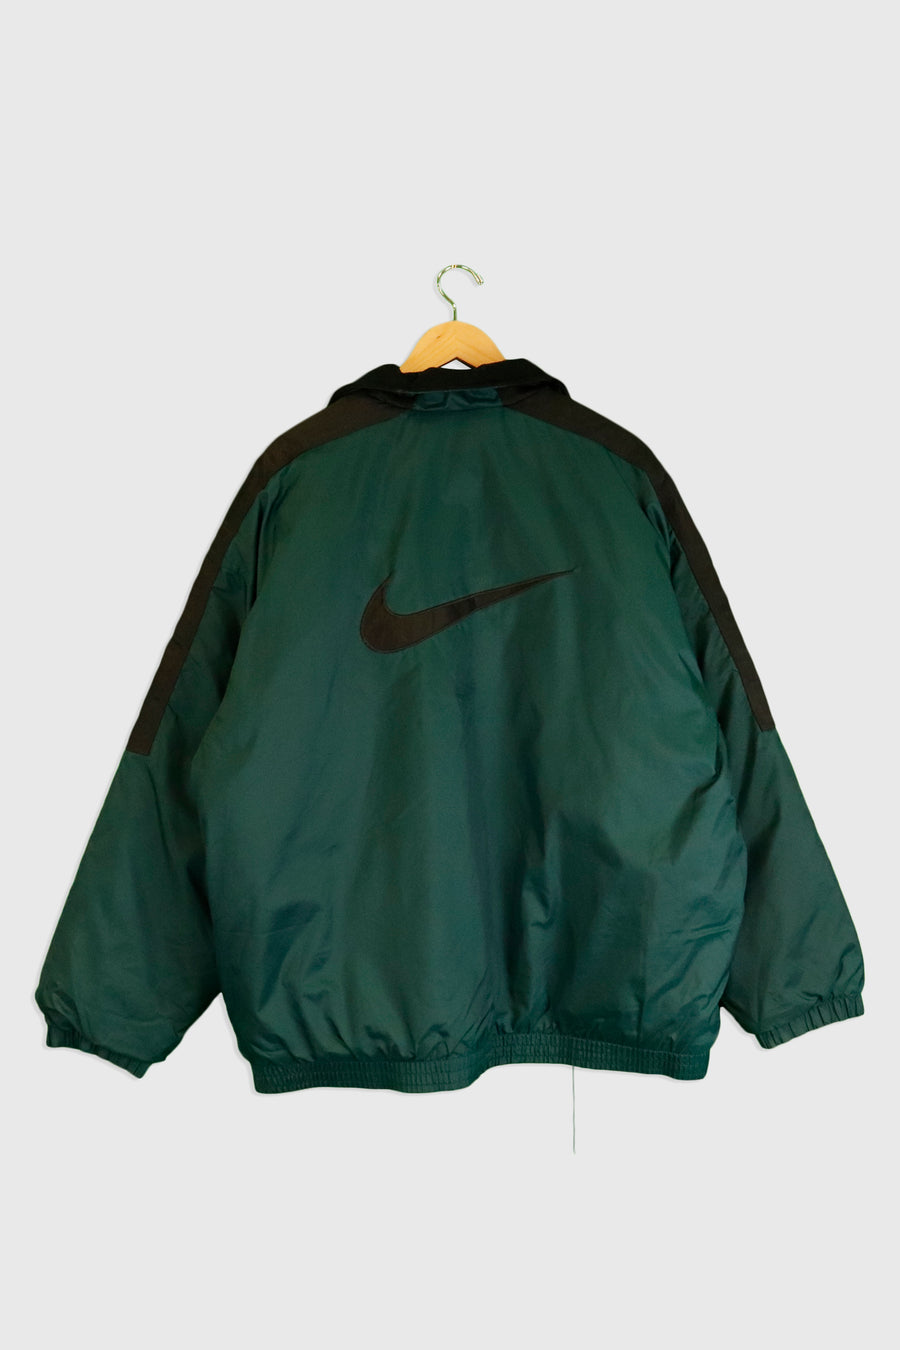 Vintage Nike Puffer 90s Jacket Sz L